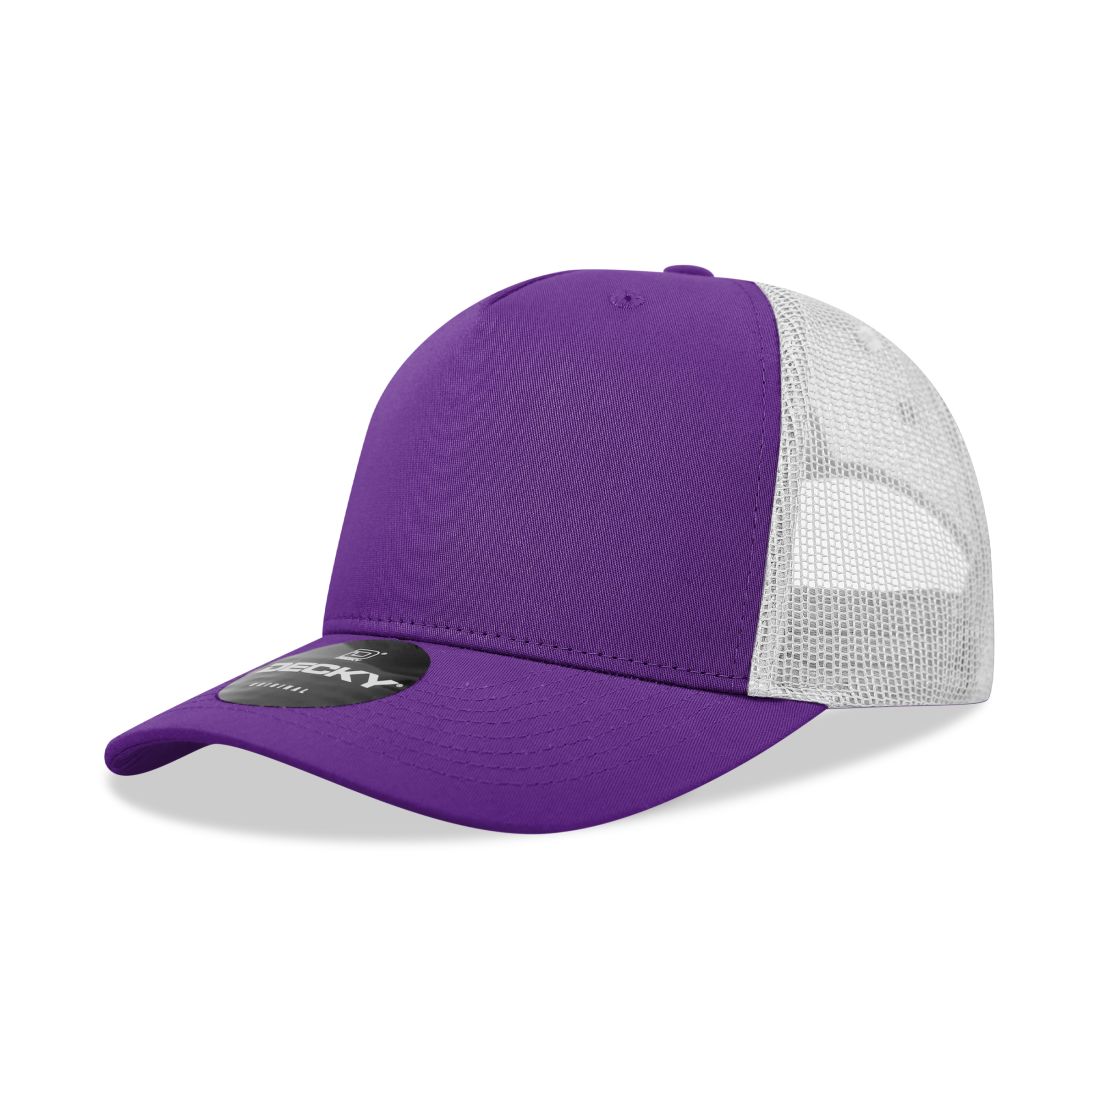 Purple/White color variant